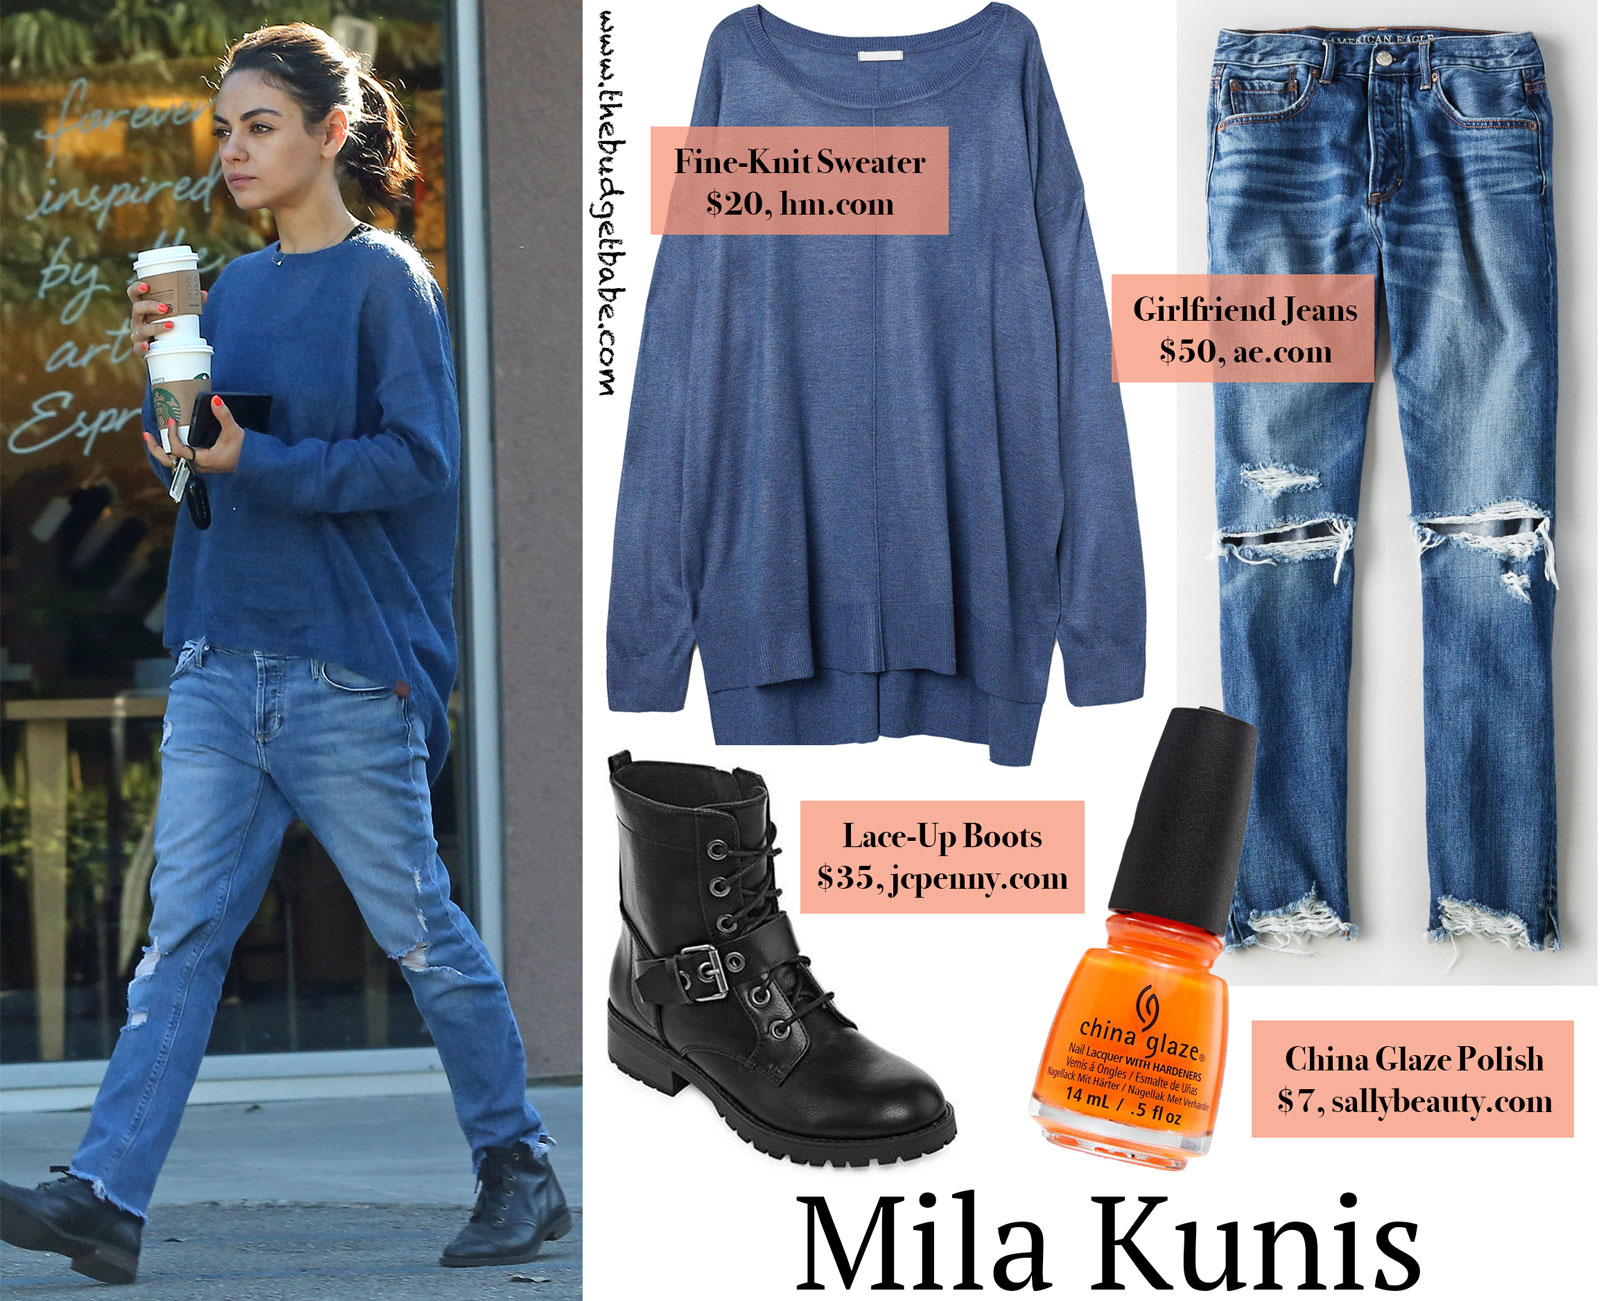 Mila Kunis One Teapsoon Jumper Look for Less